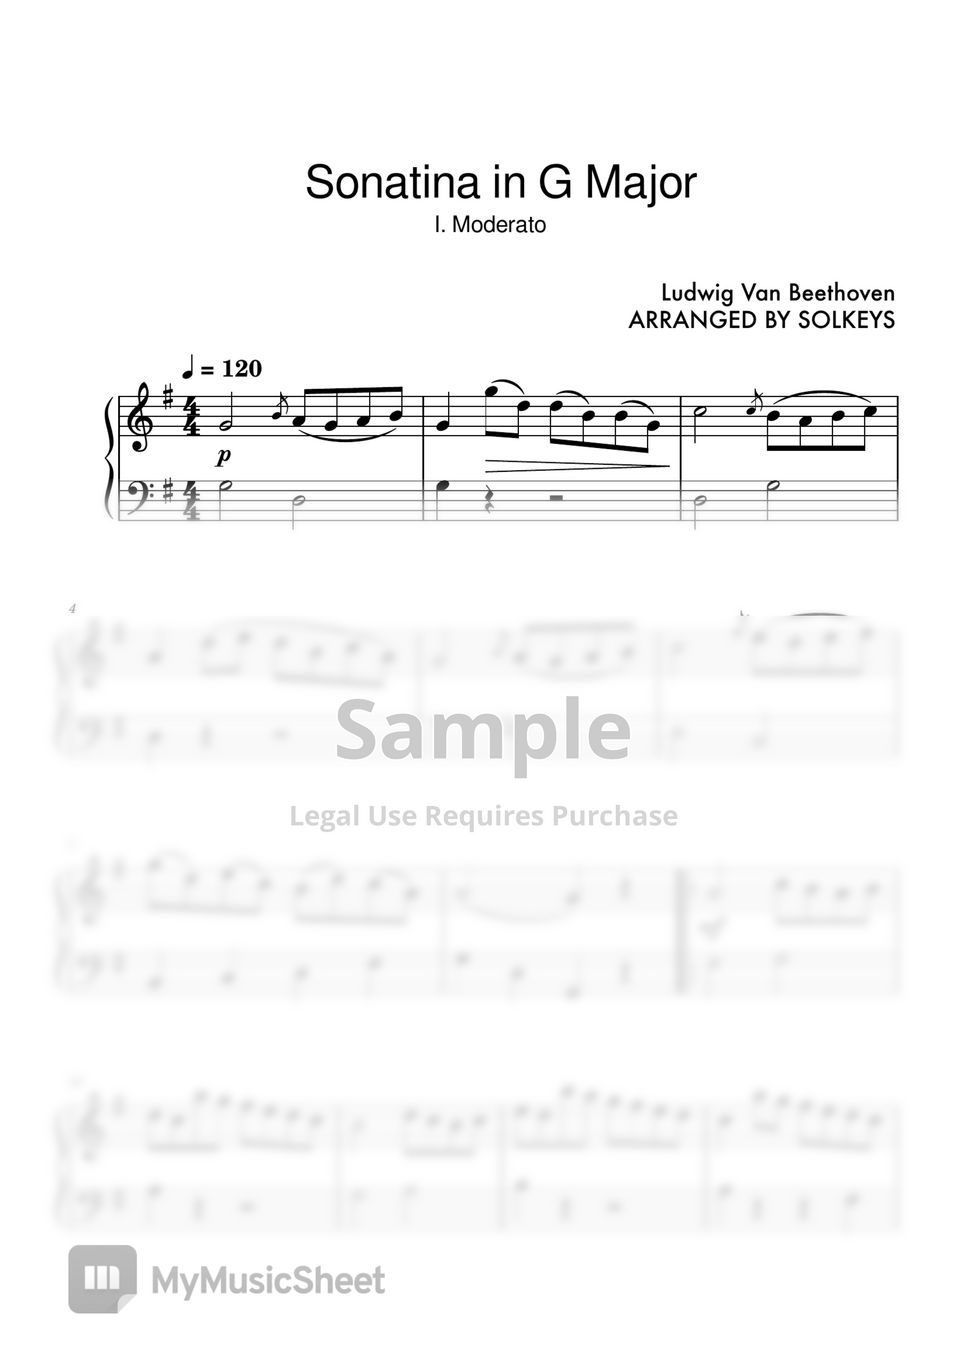 L. Beethoven - Sonatina in G Major by SolKeys